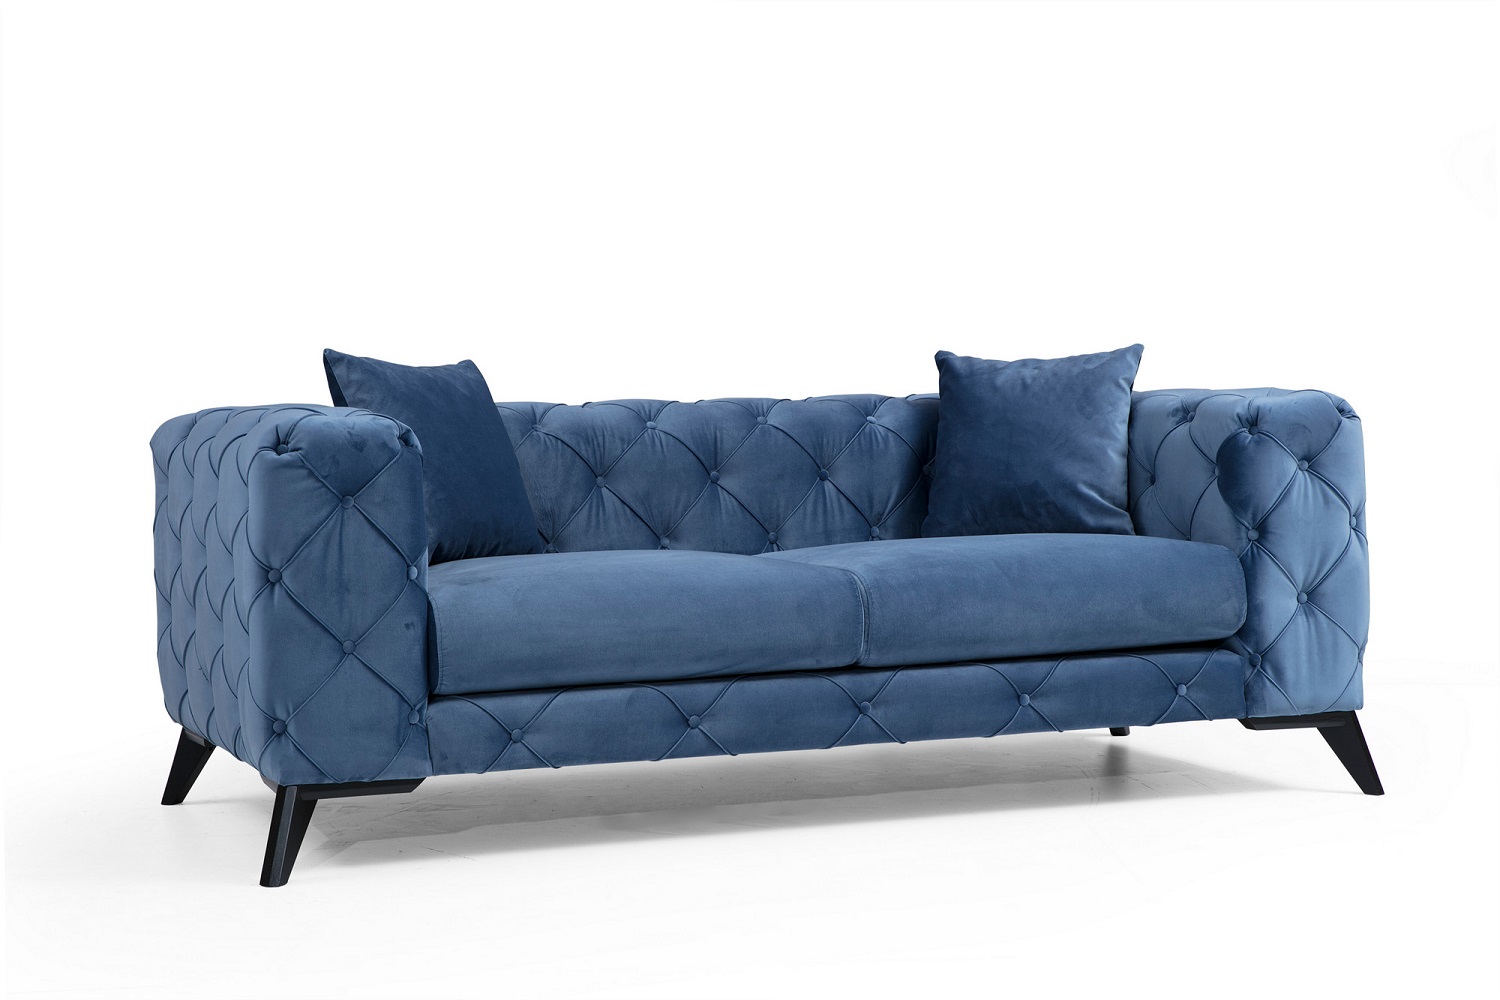 dizajnova-sedacka-rococo-197-cm-modra-3